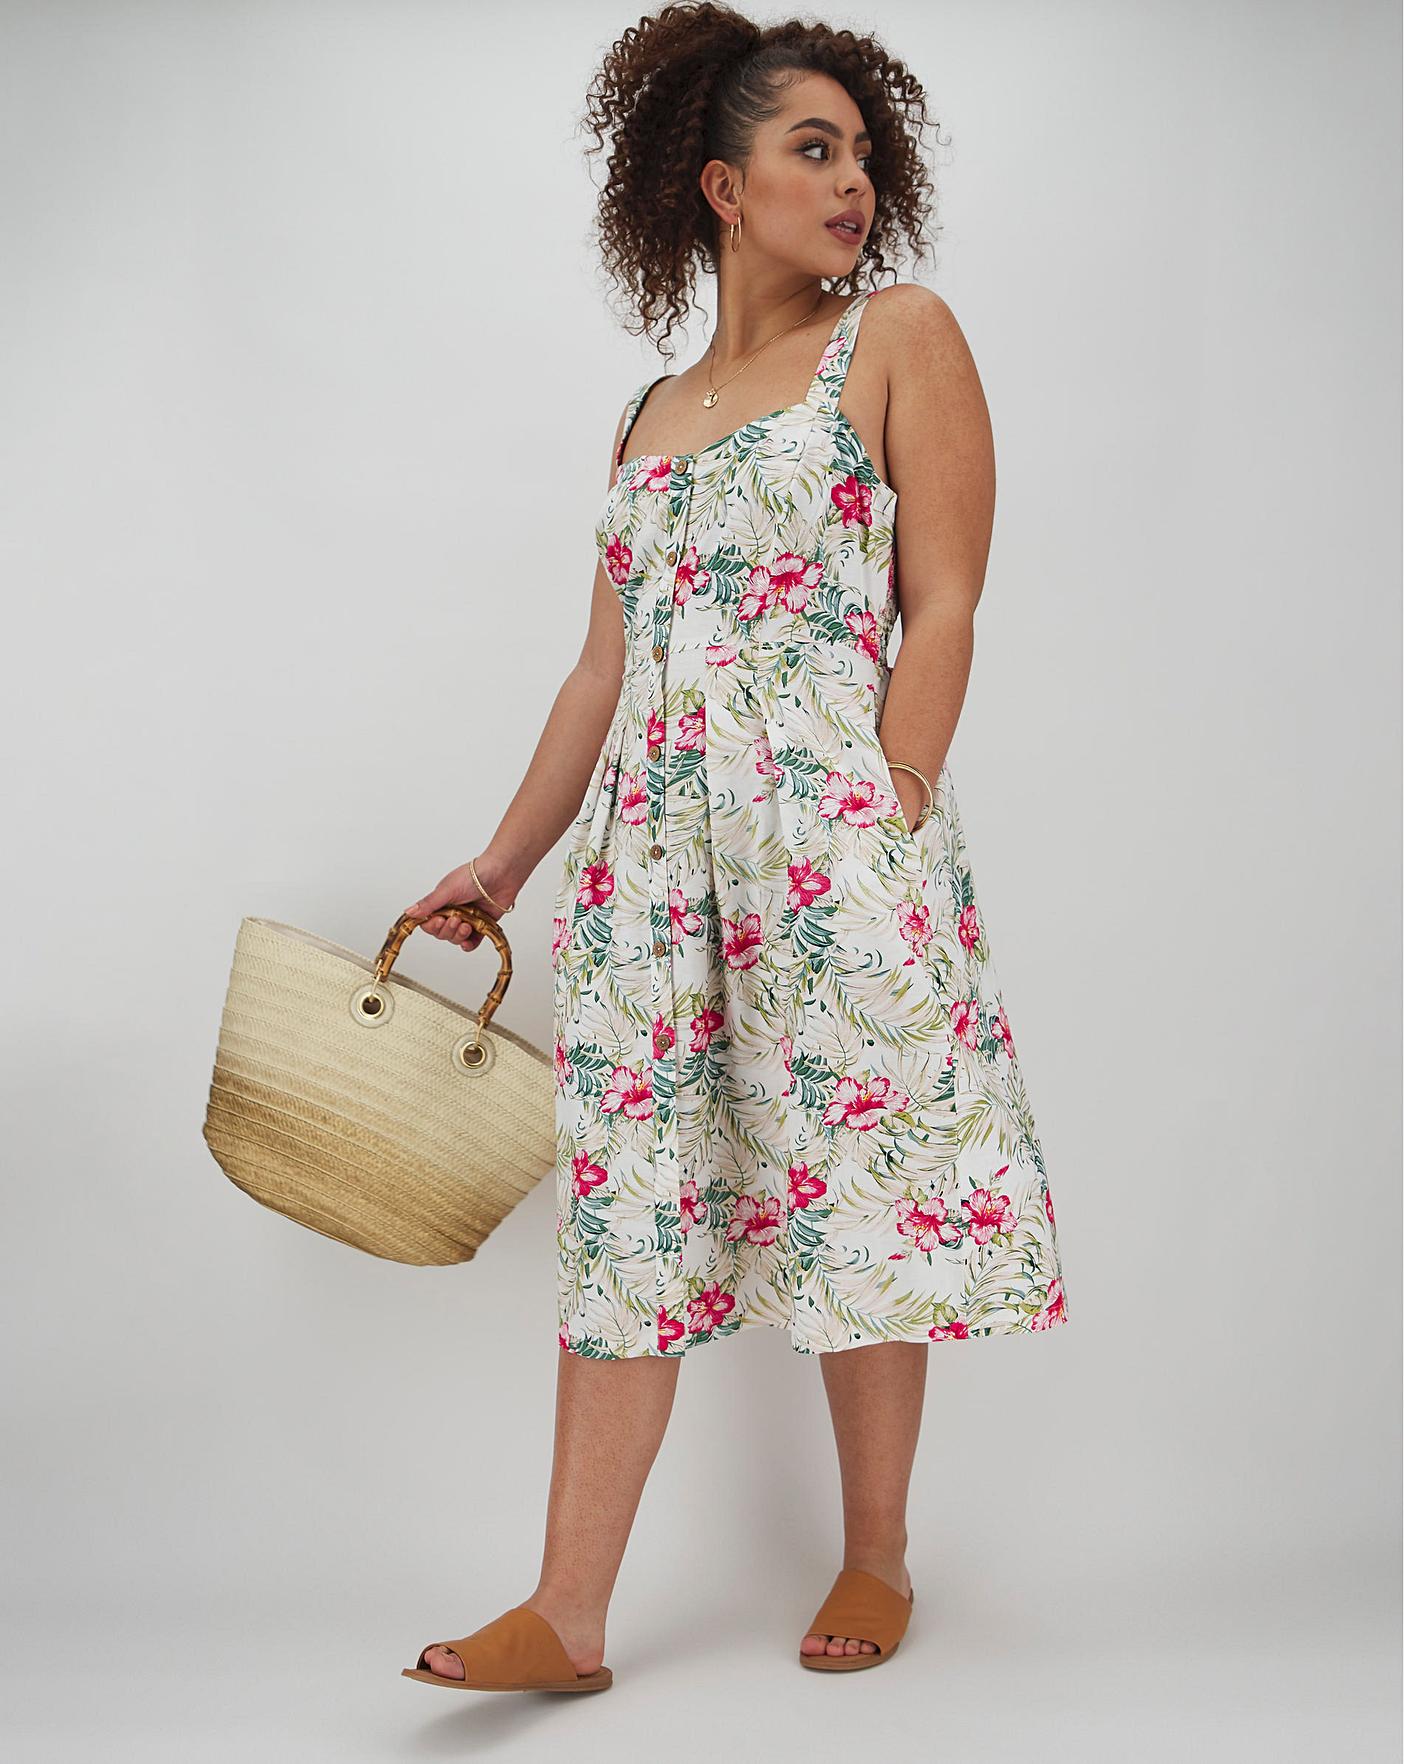 Joe Browns Floral Mixed Linen Dress | Simply Be